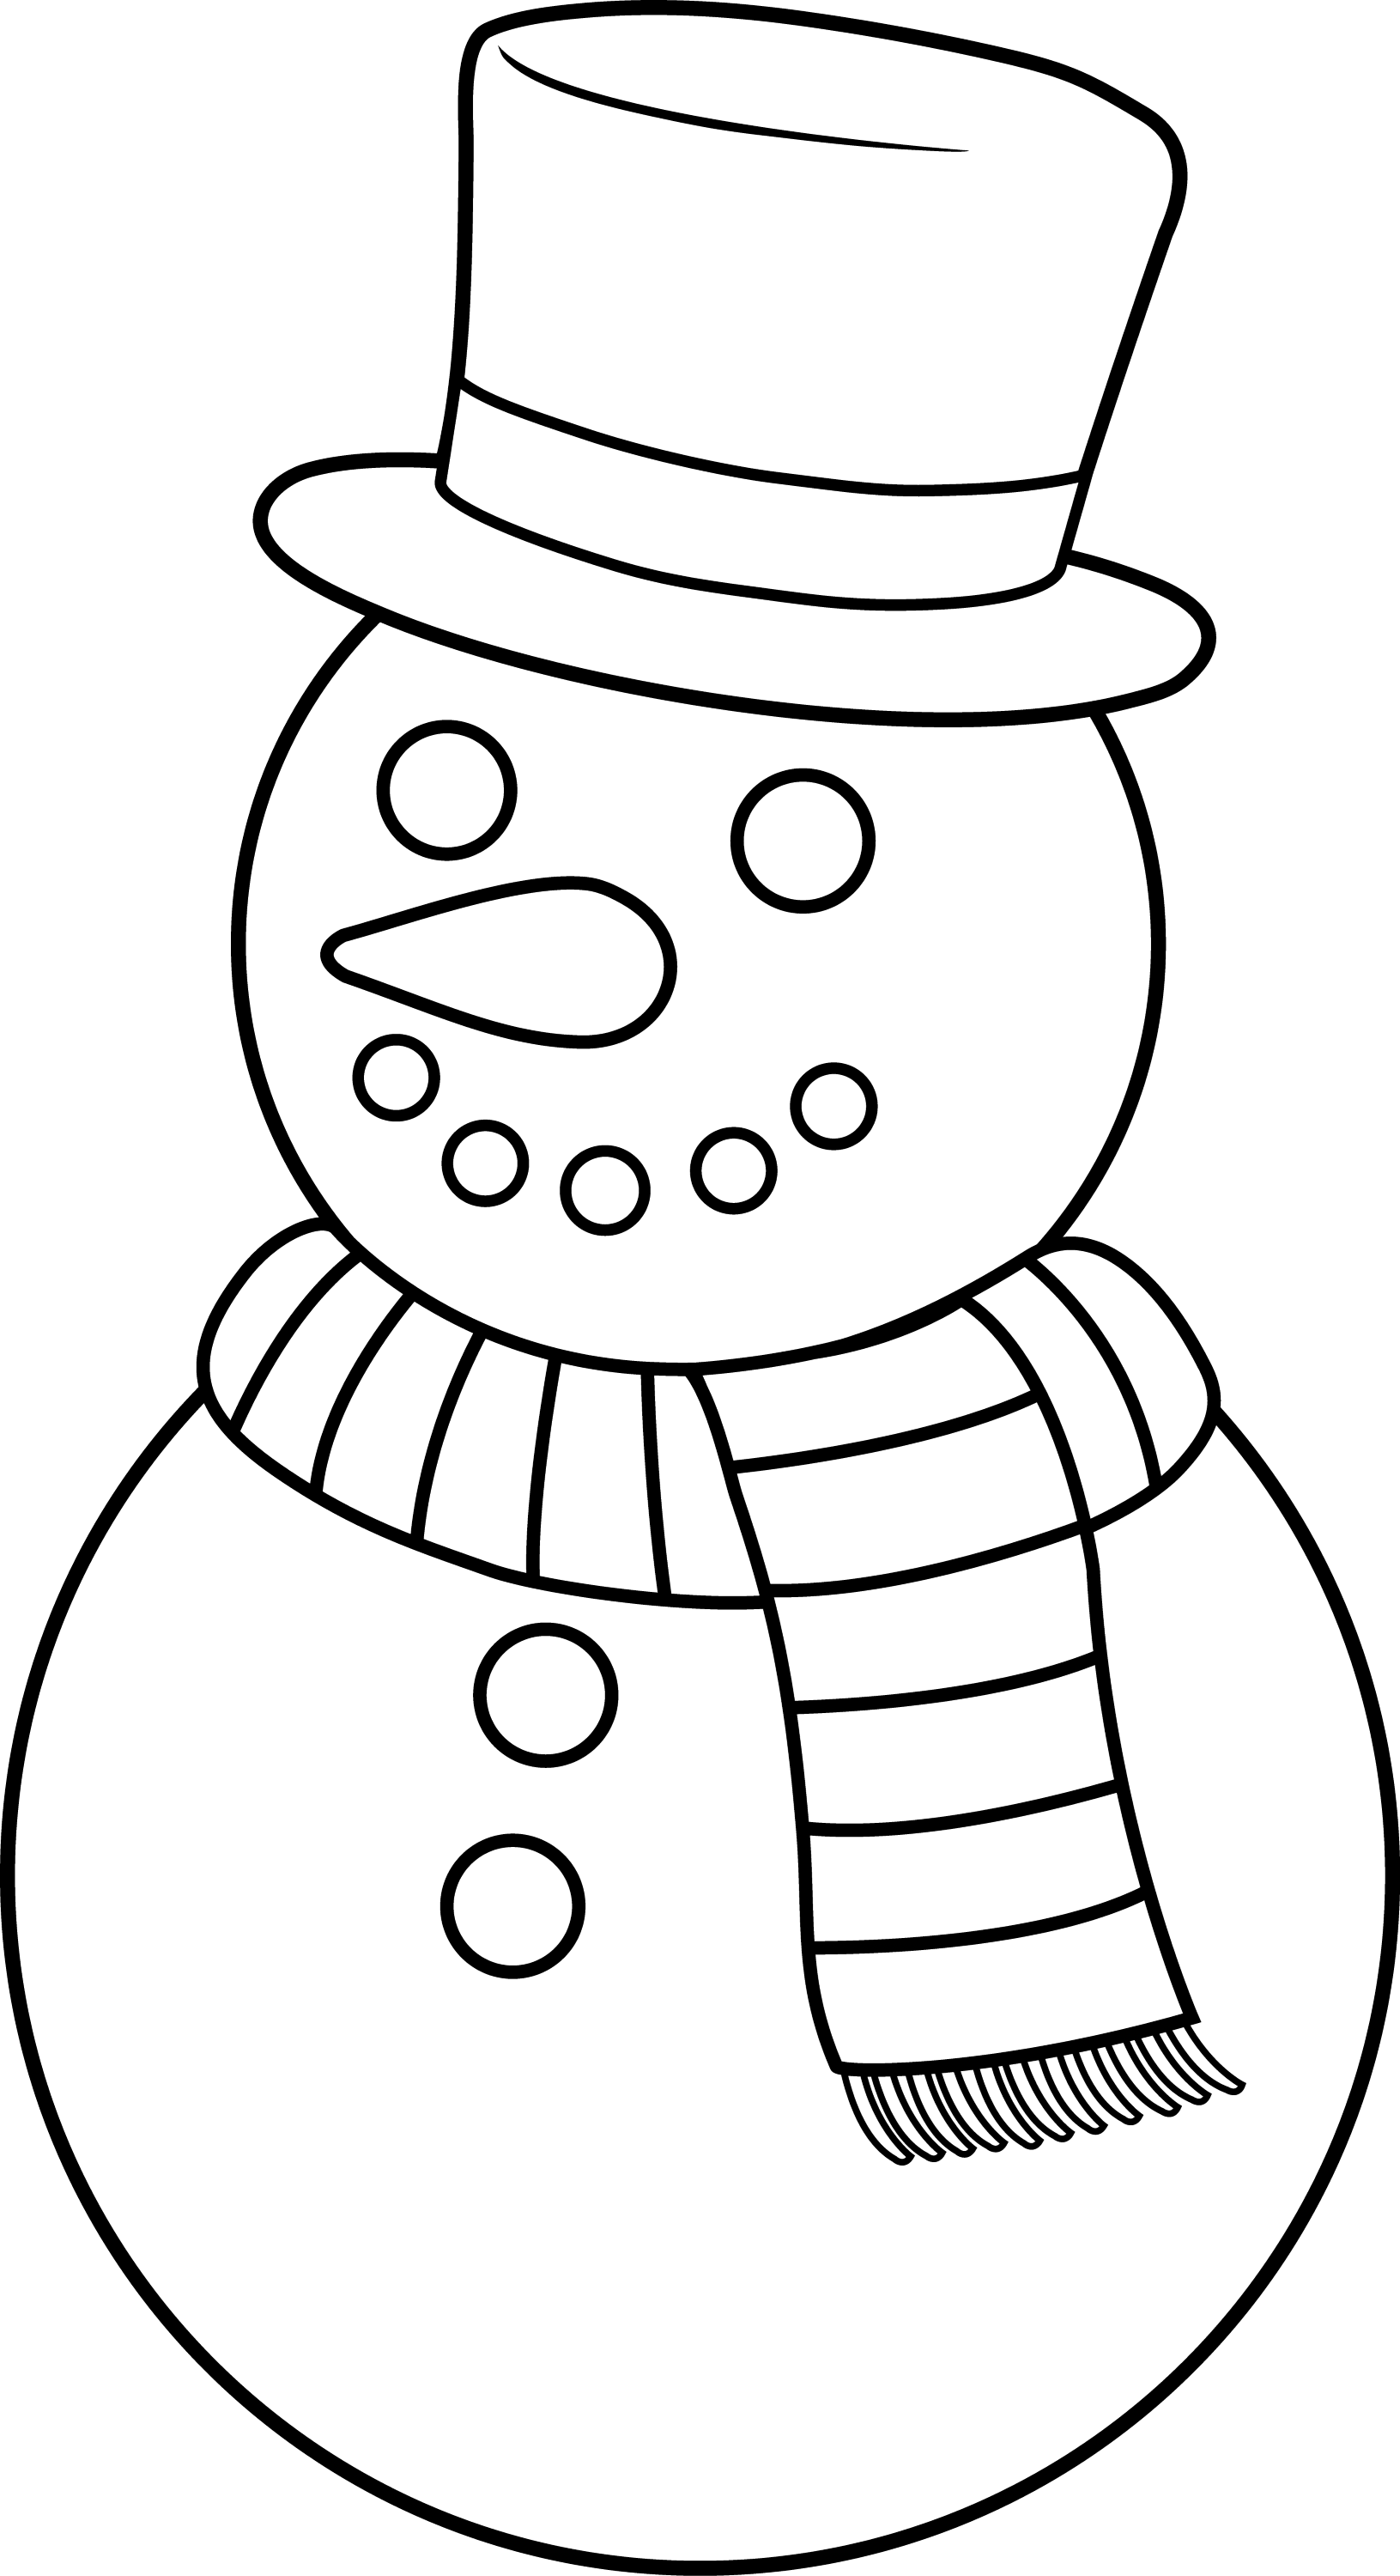 colorable-christmas-snowman-free-clip-art